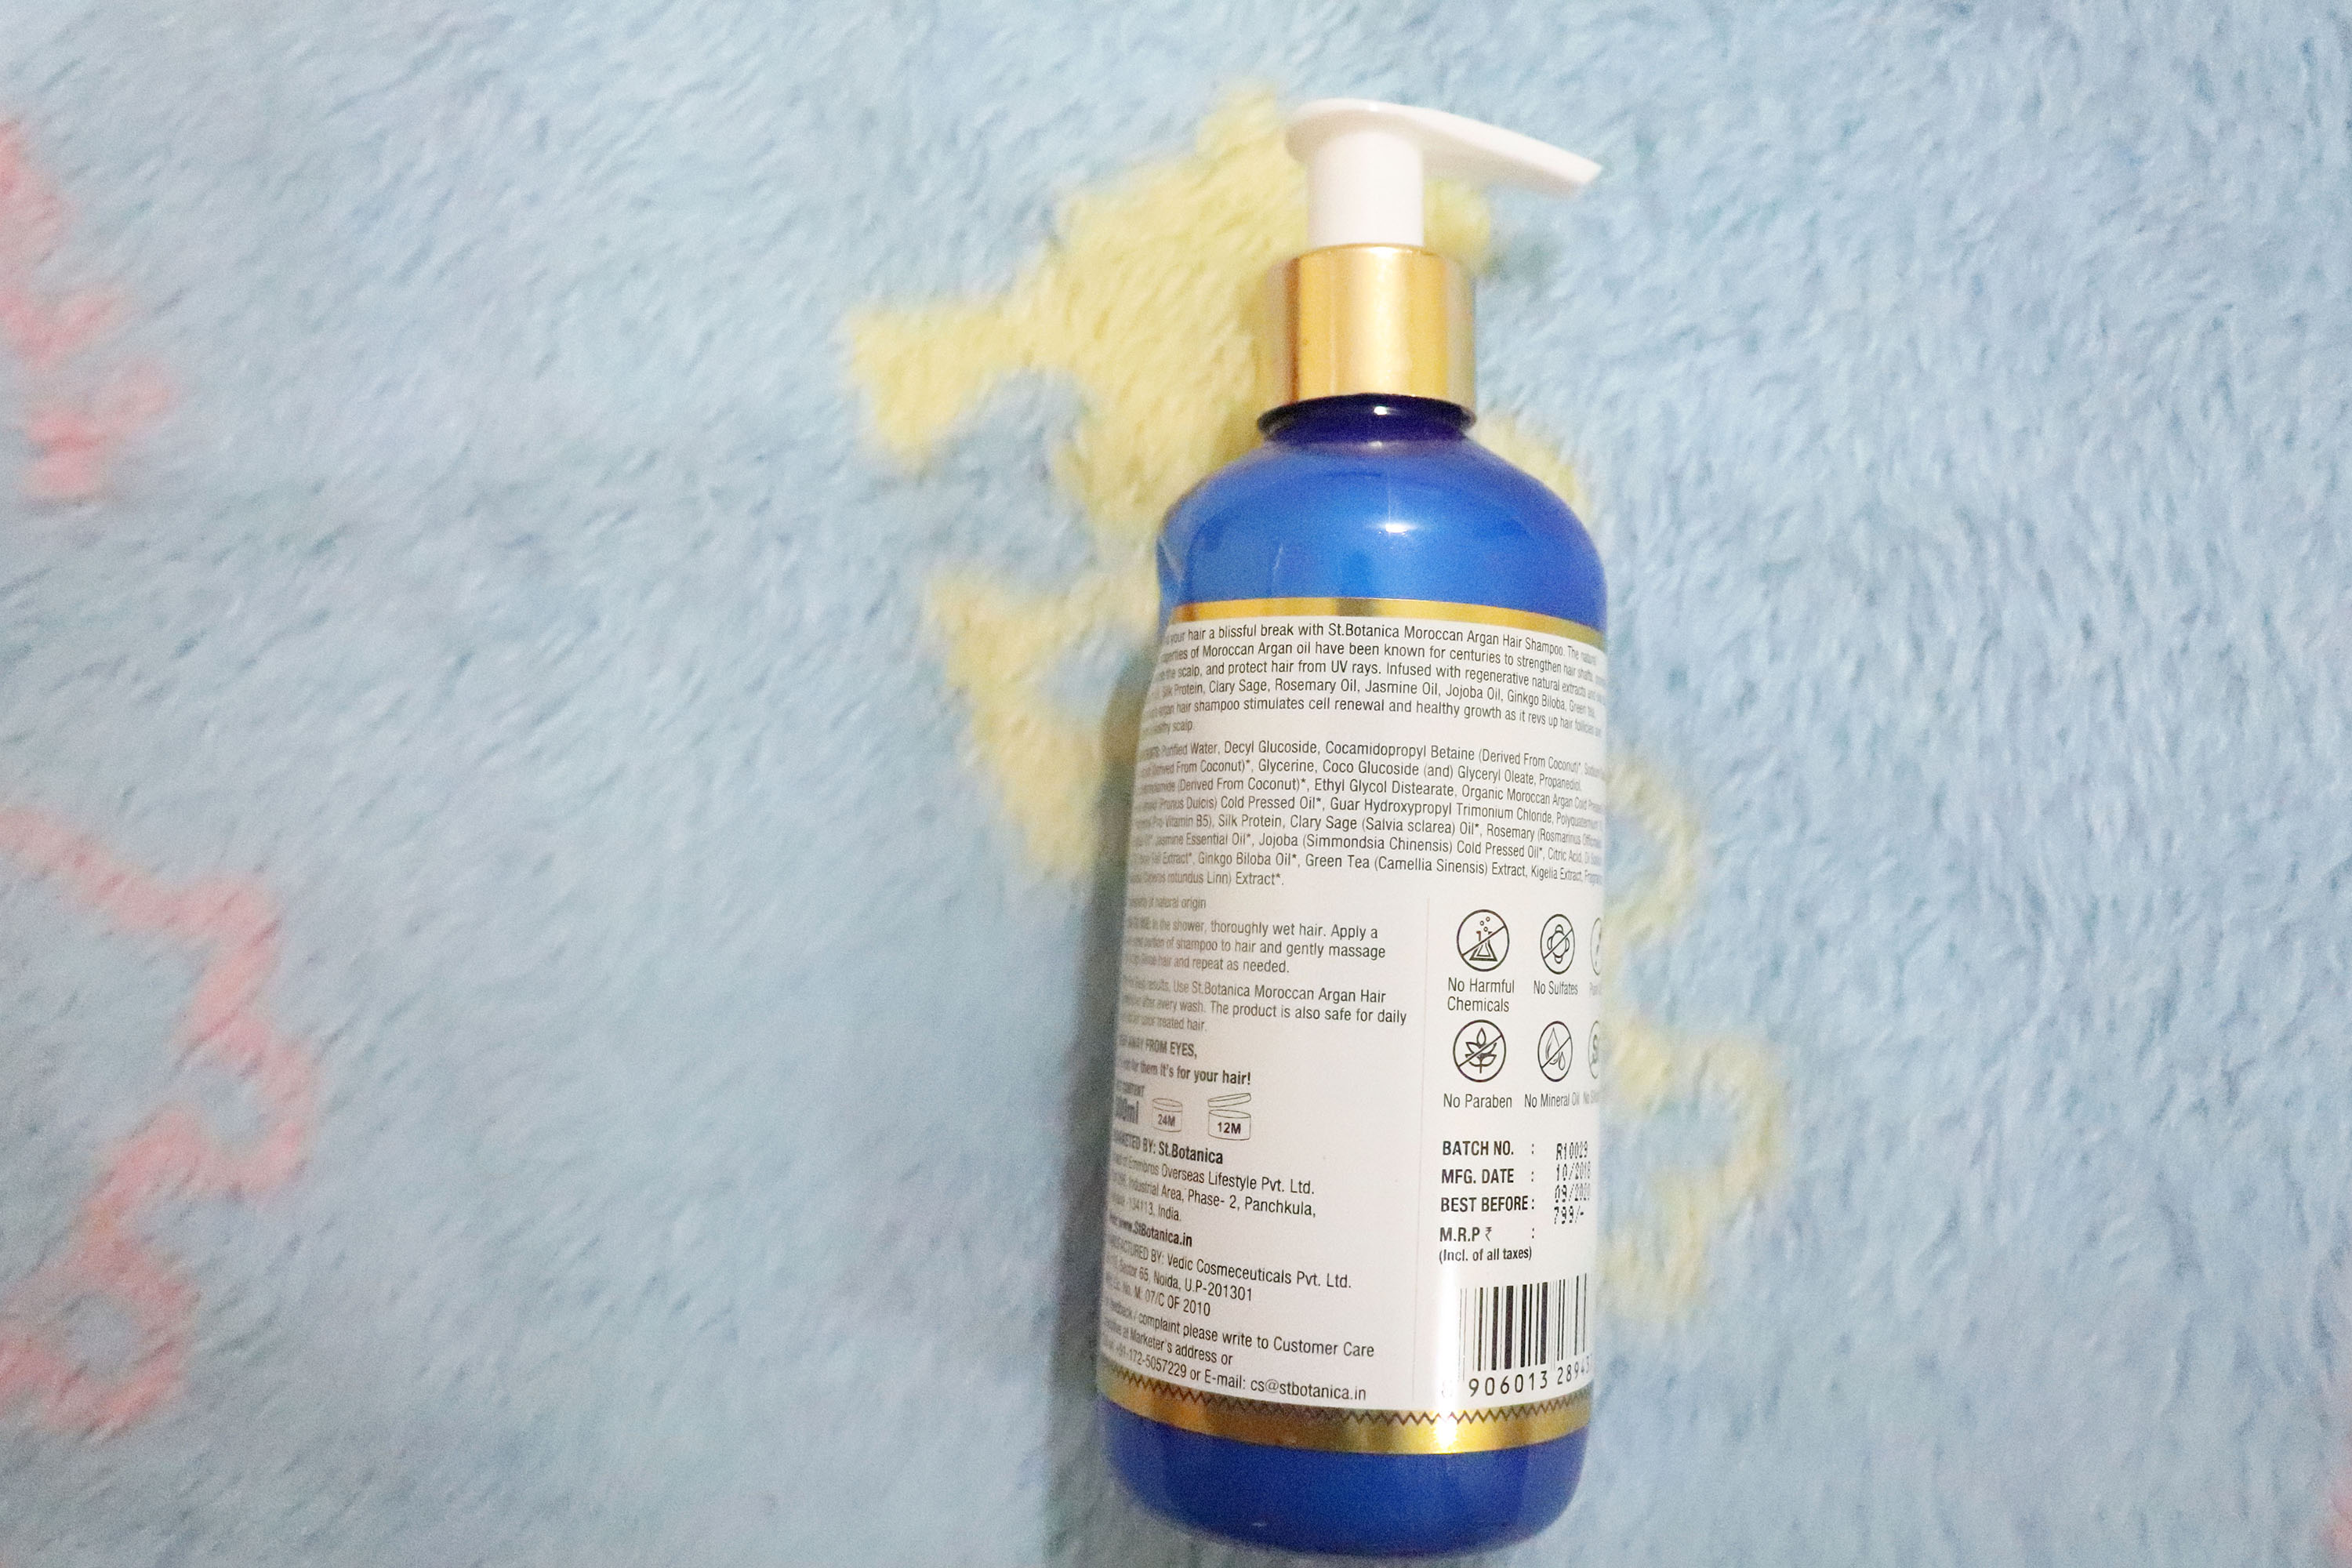 St. Botanica MOROCCAN ARGAN Shampoo and Conditioner Review – THANIMA